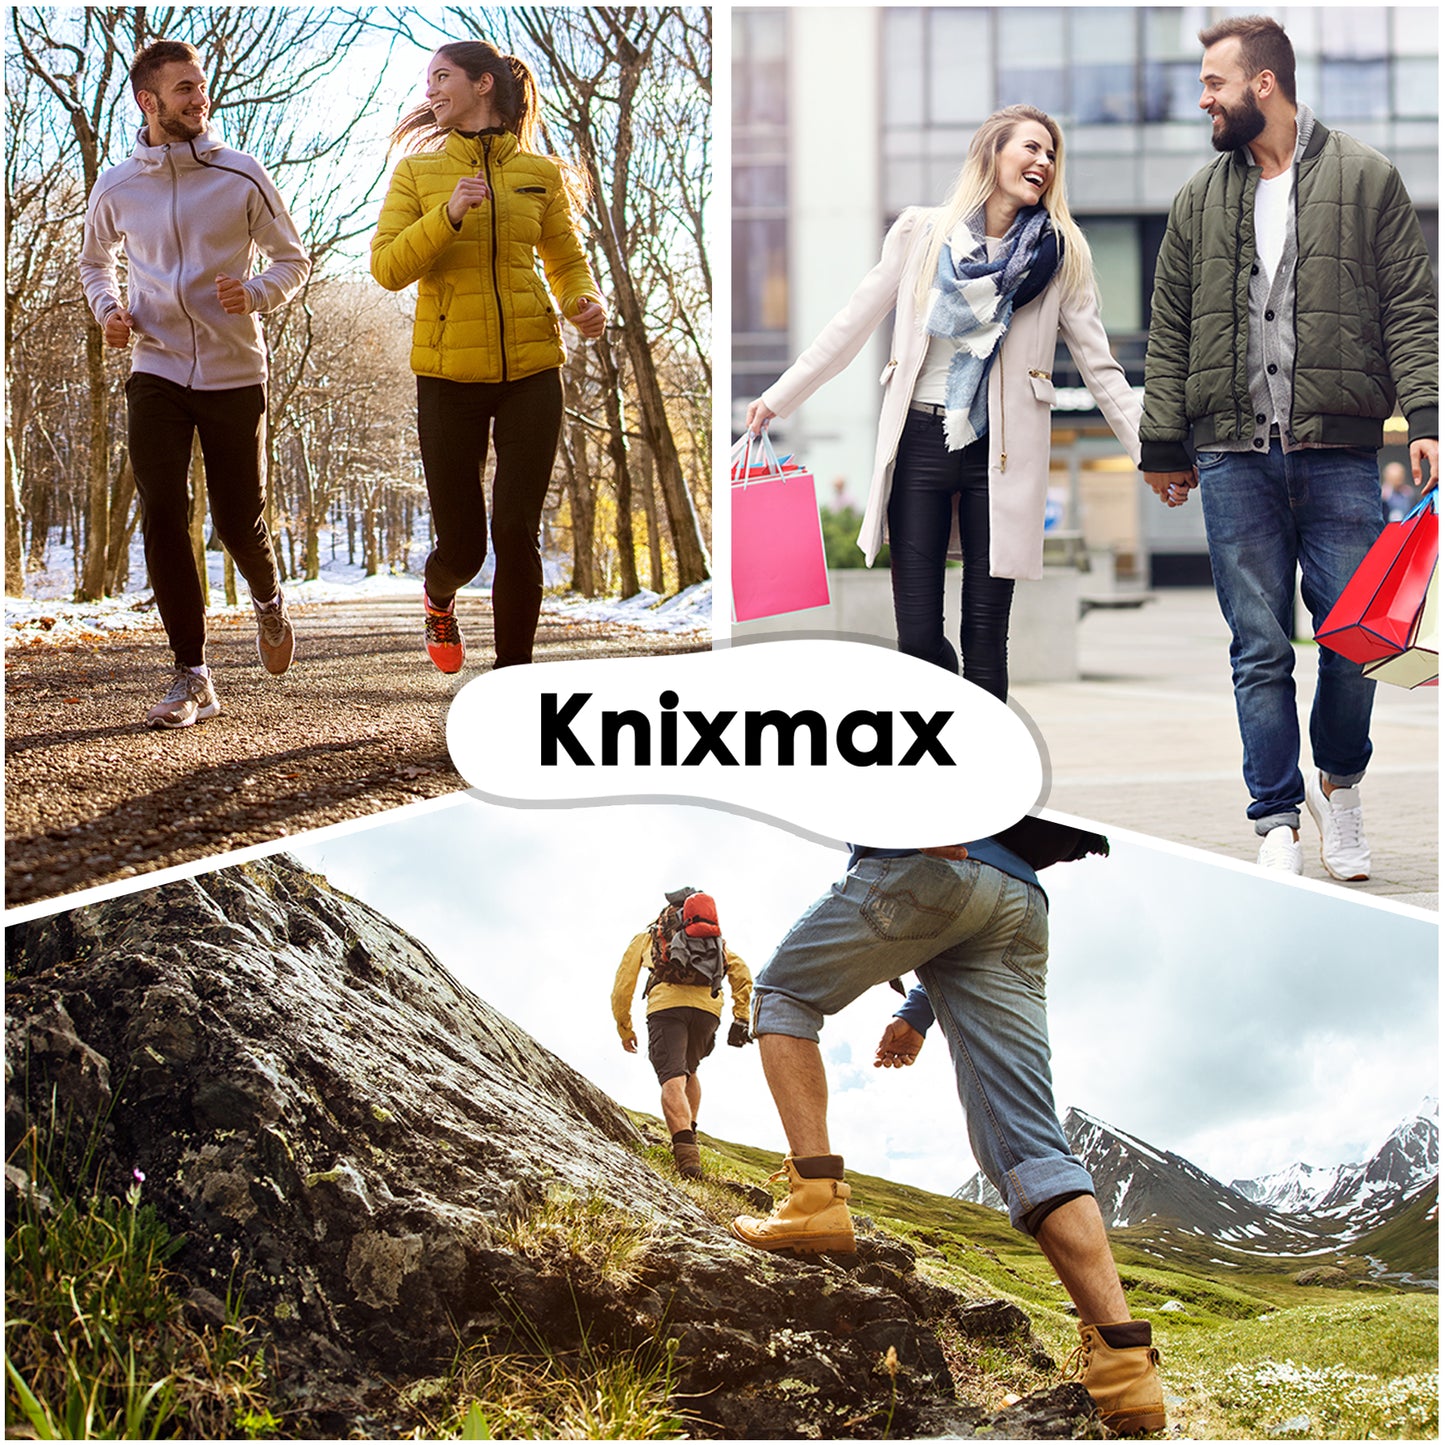 Knixmax Men & Women's Memory Foam Insoles, Black, for Athletic Shoes & Sneakers